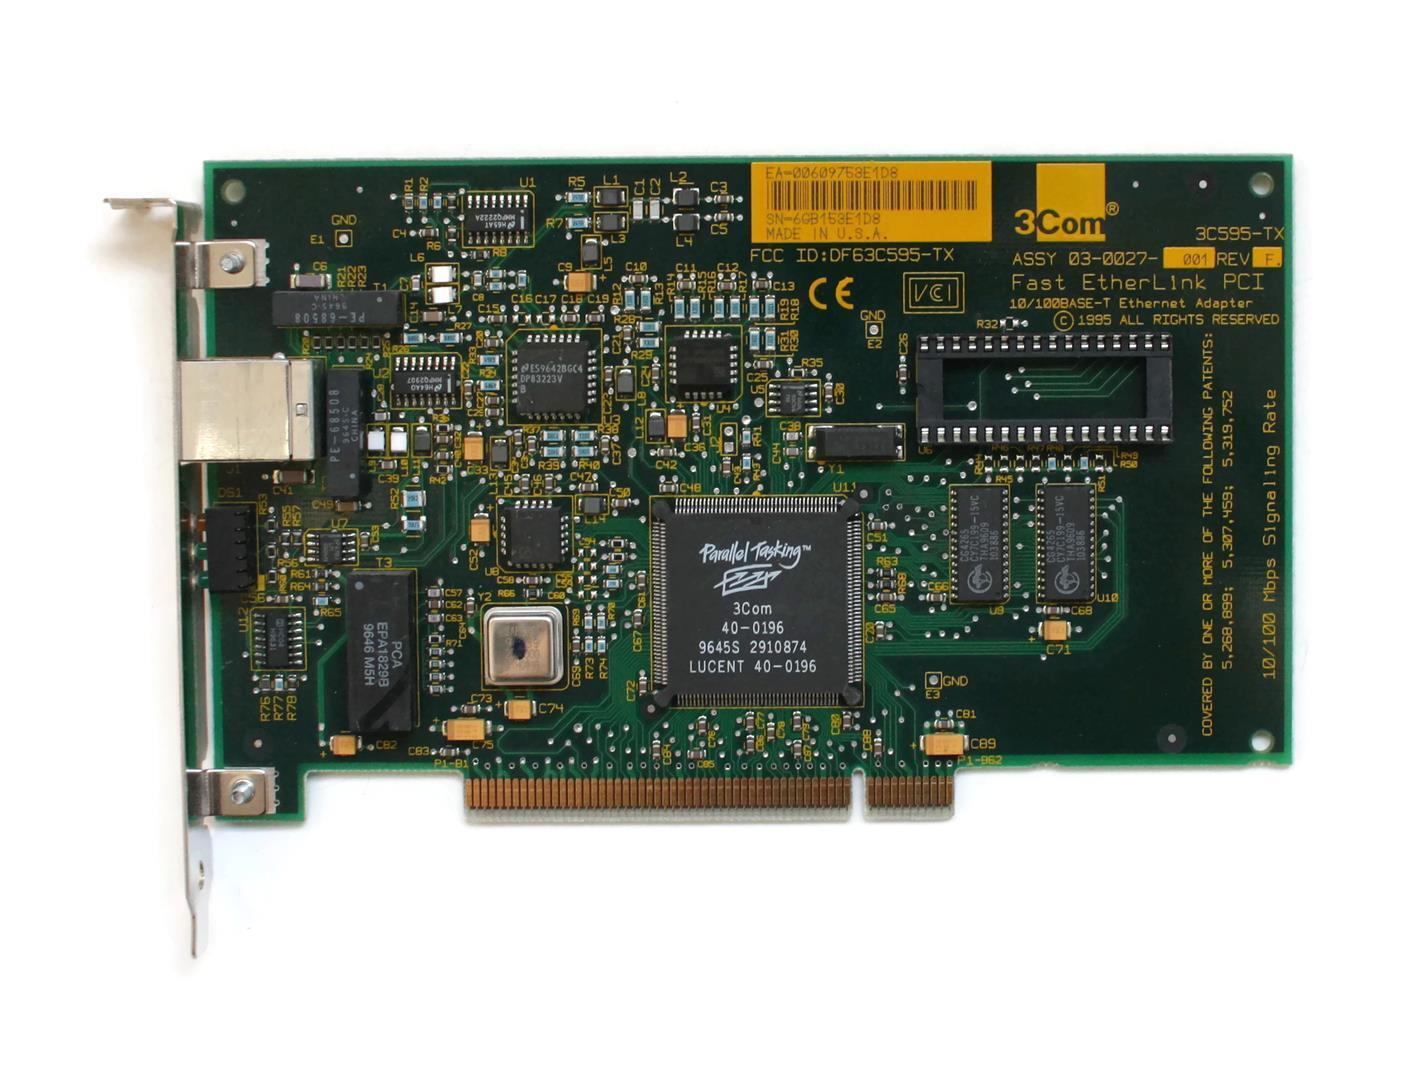 Ethernet PCI, ASSY 03-0027-001 F, 10/100BASE-T